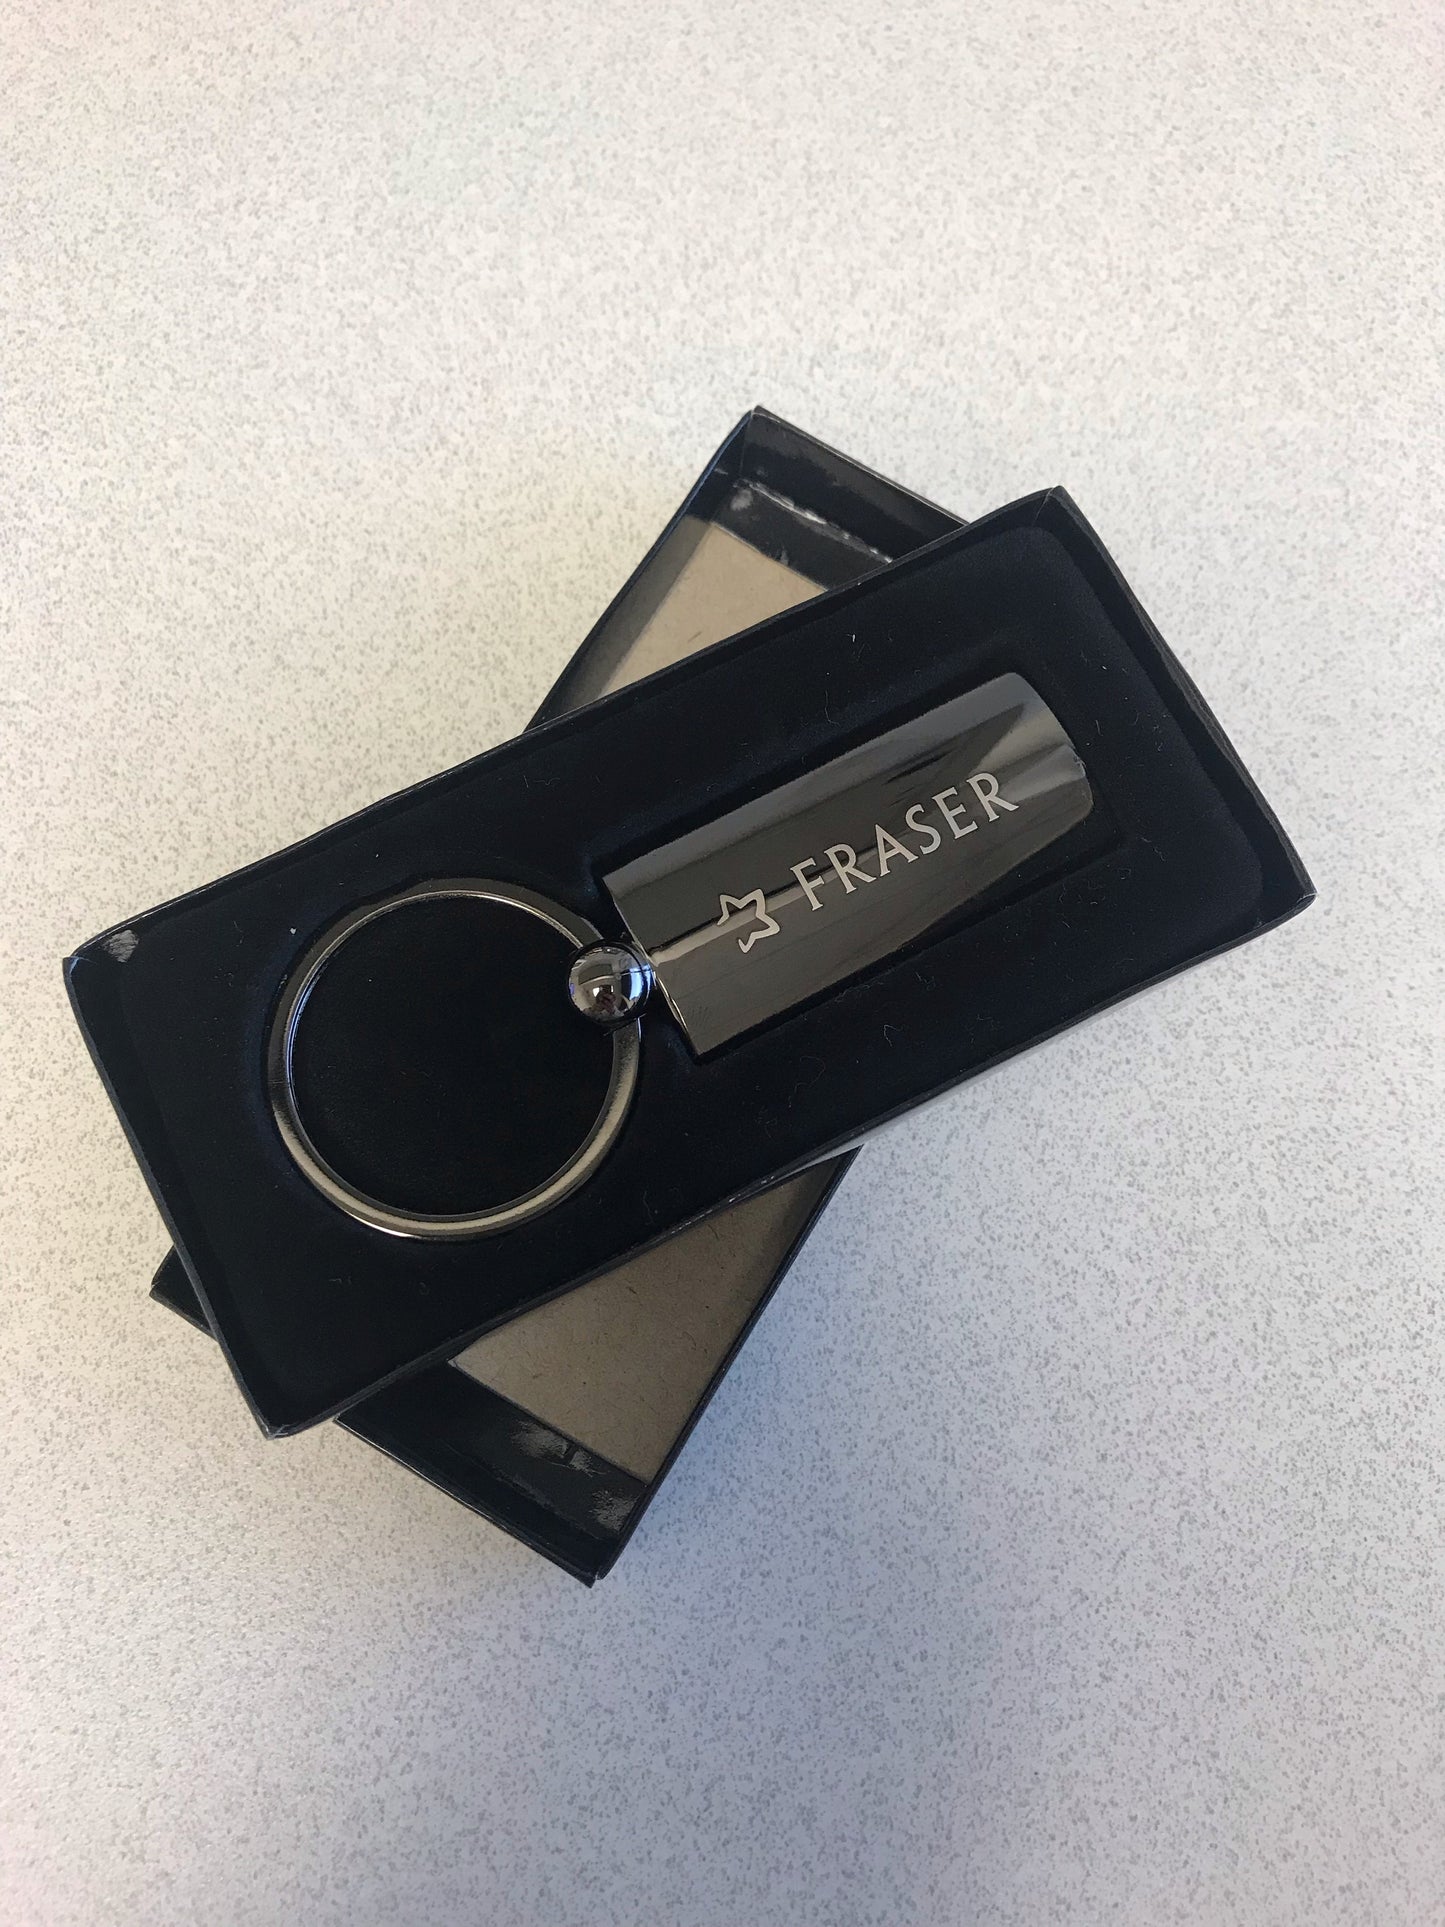 Laser Engraved Metal Keychain